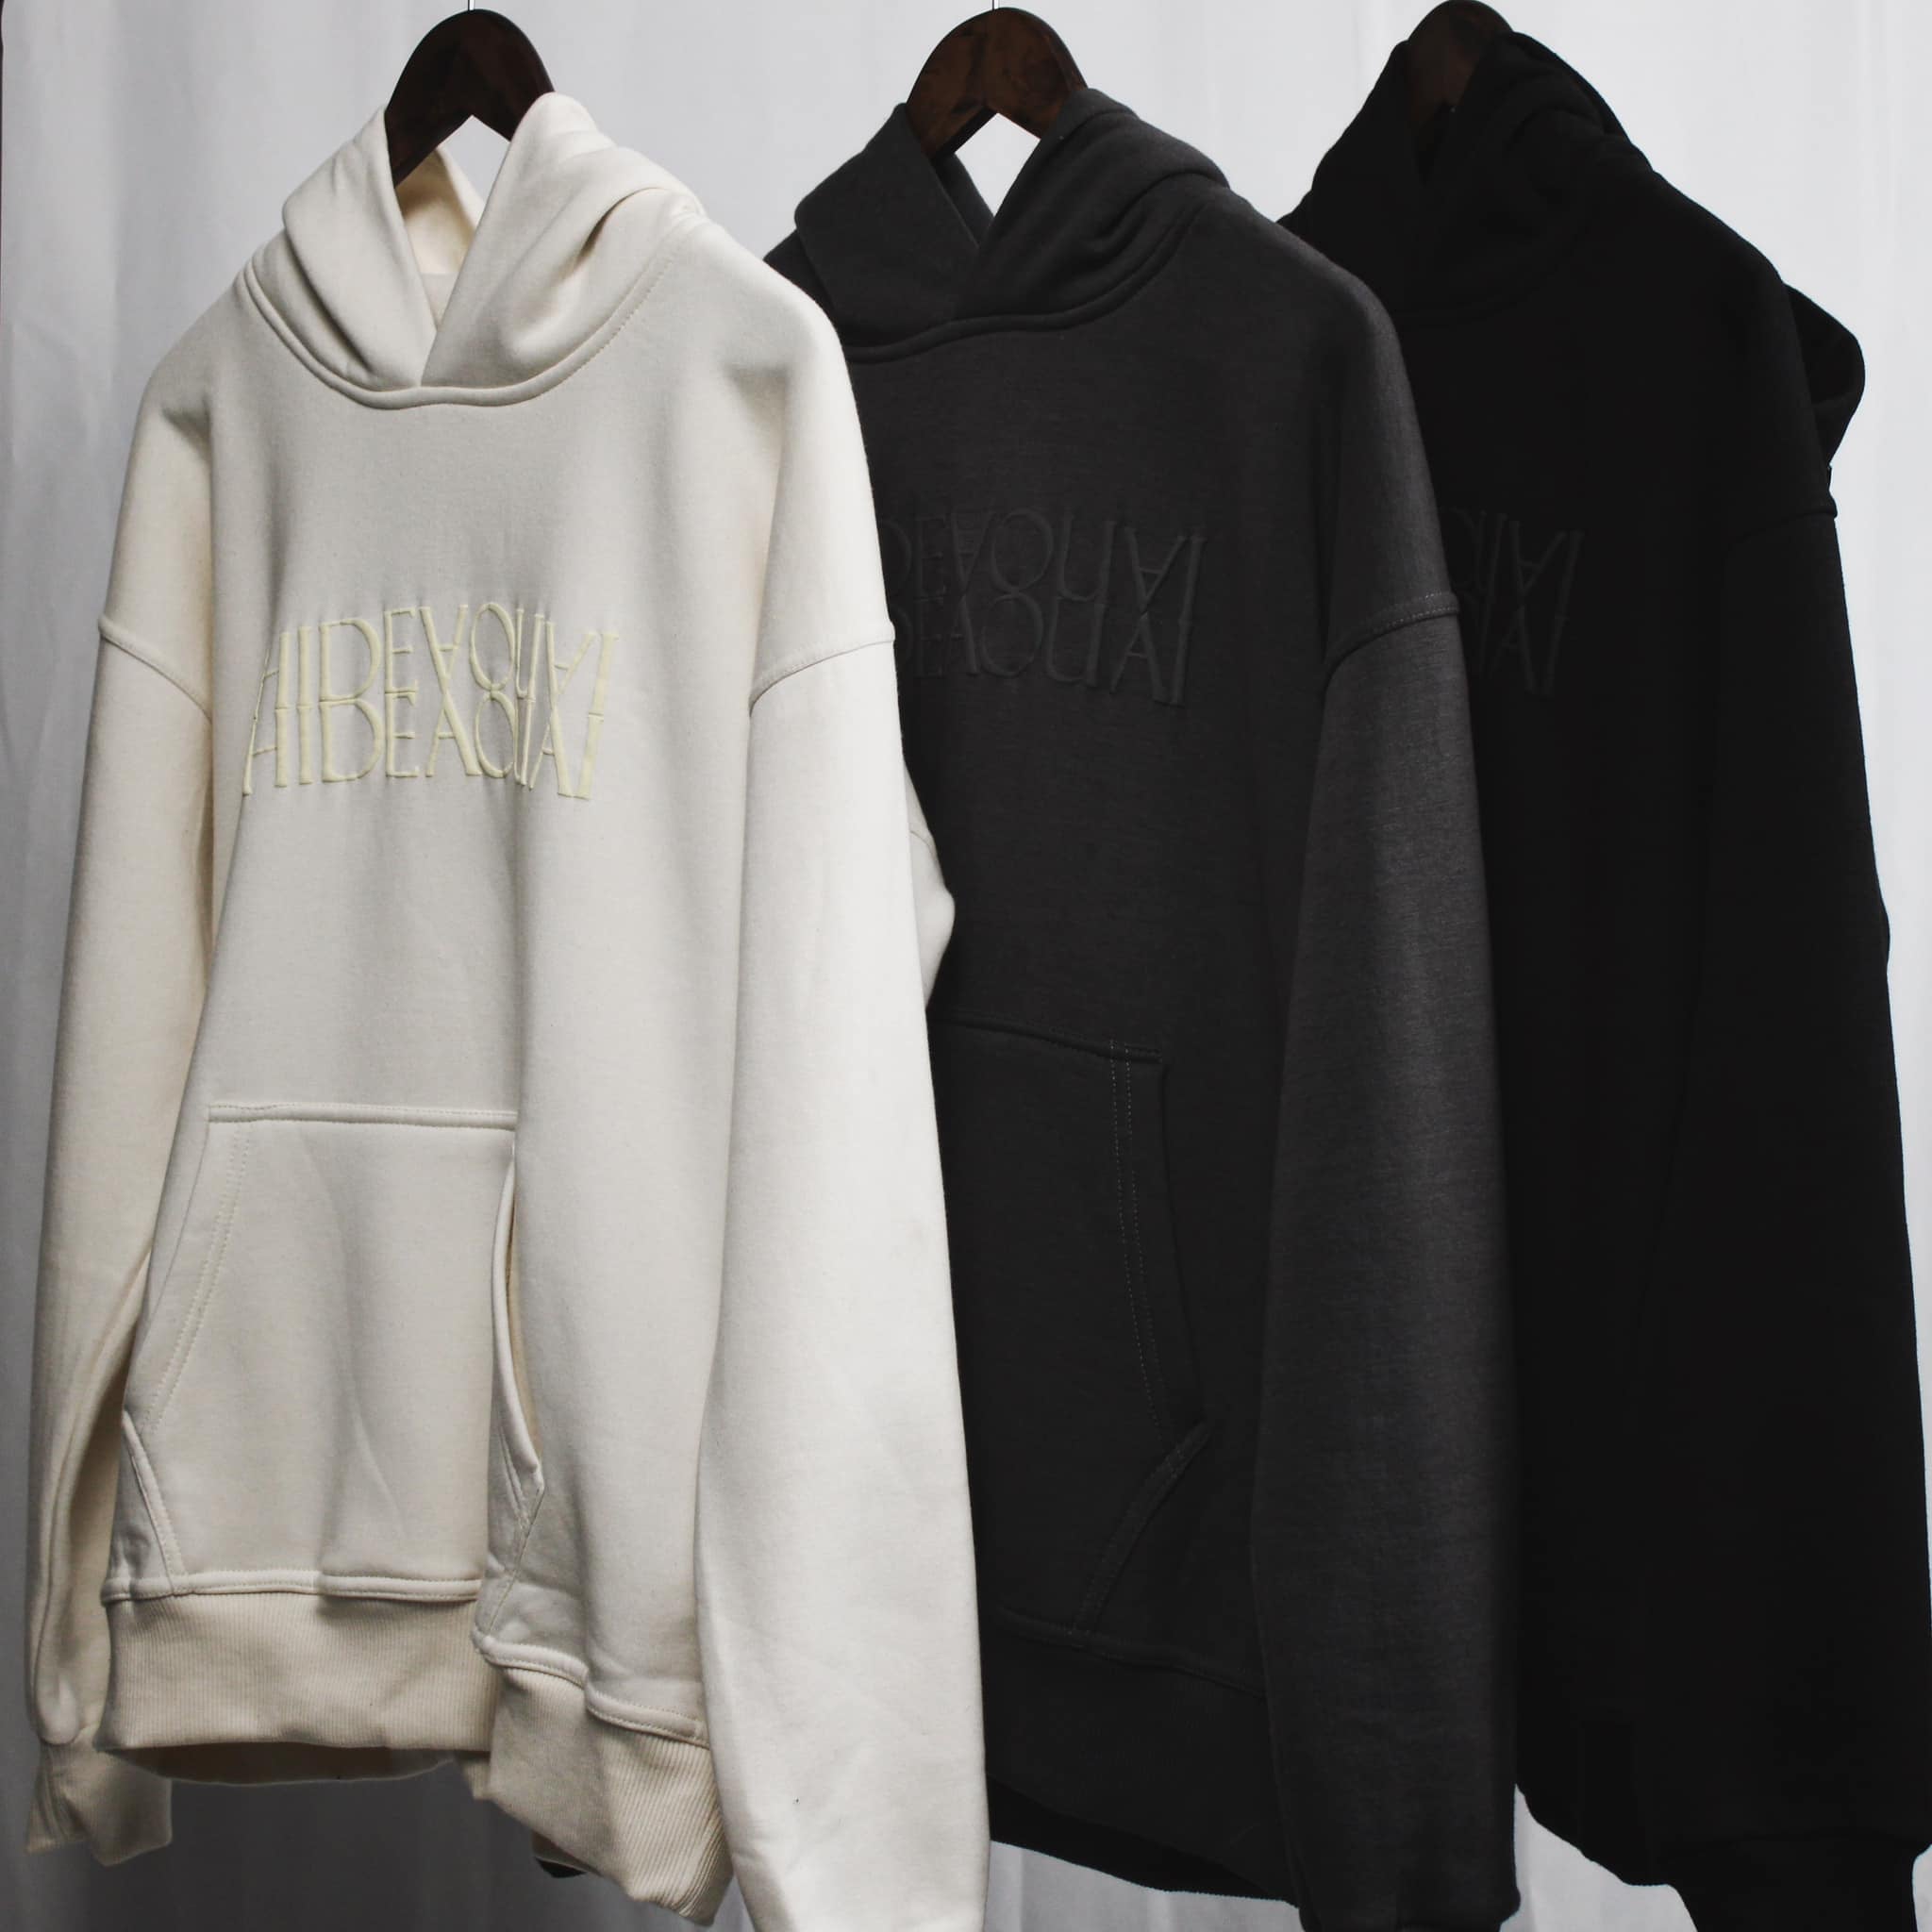 What makes Hideaouai custom premium hoodies unique